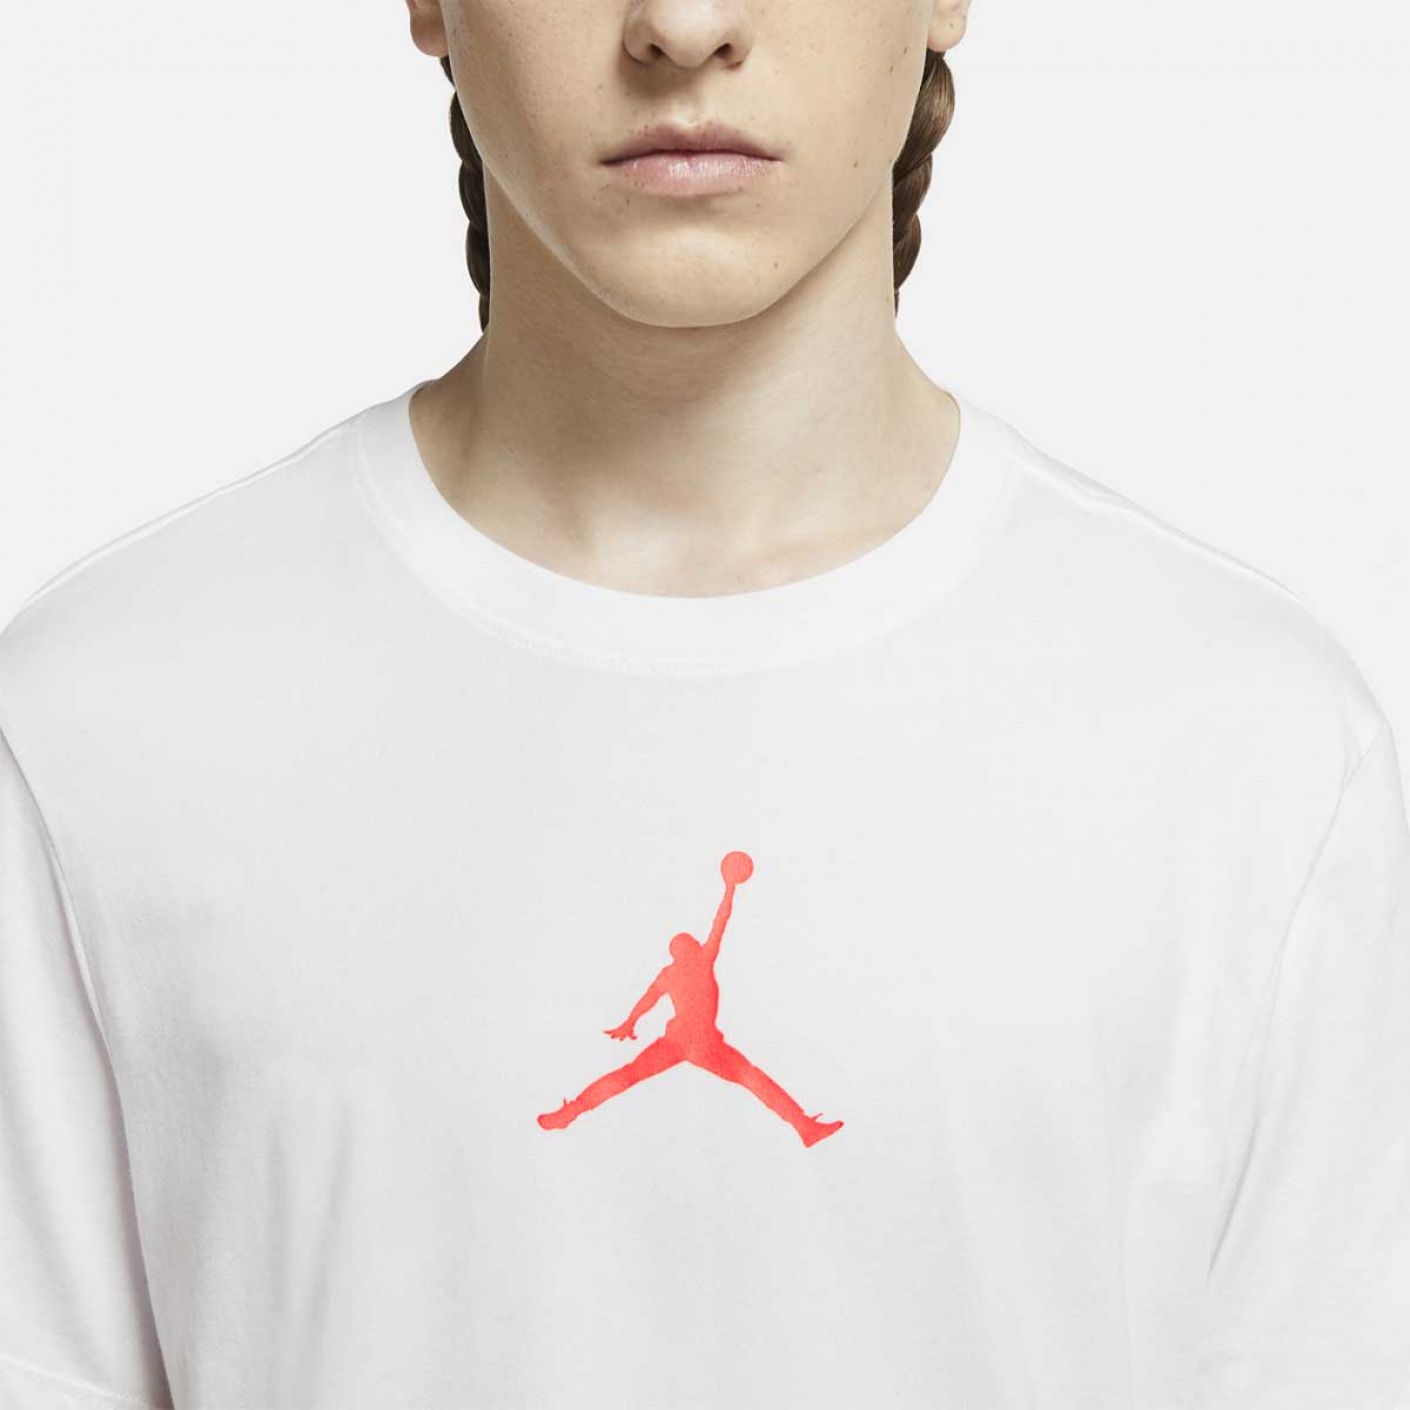 Nike Jordan Jumpman dfct Crew White T-shirt for Men